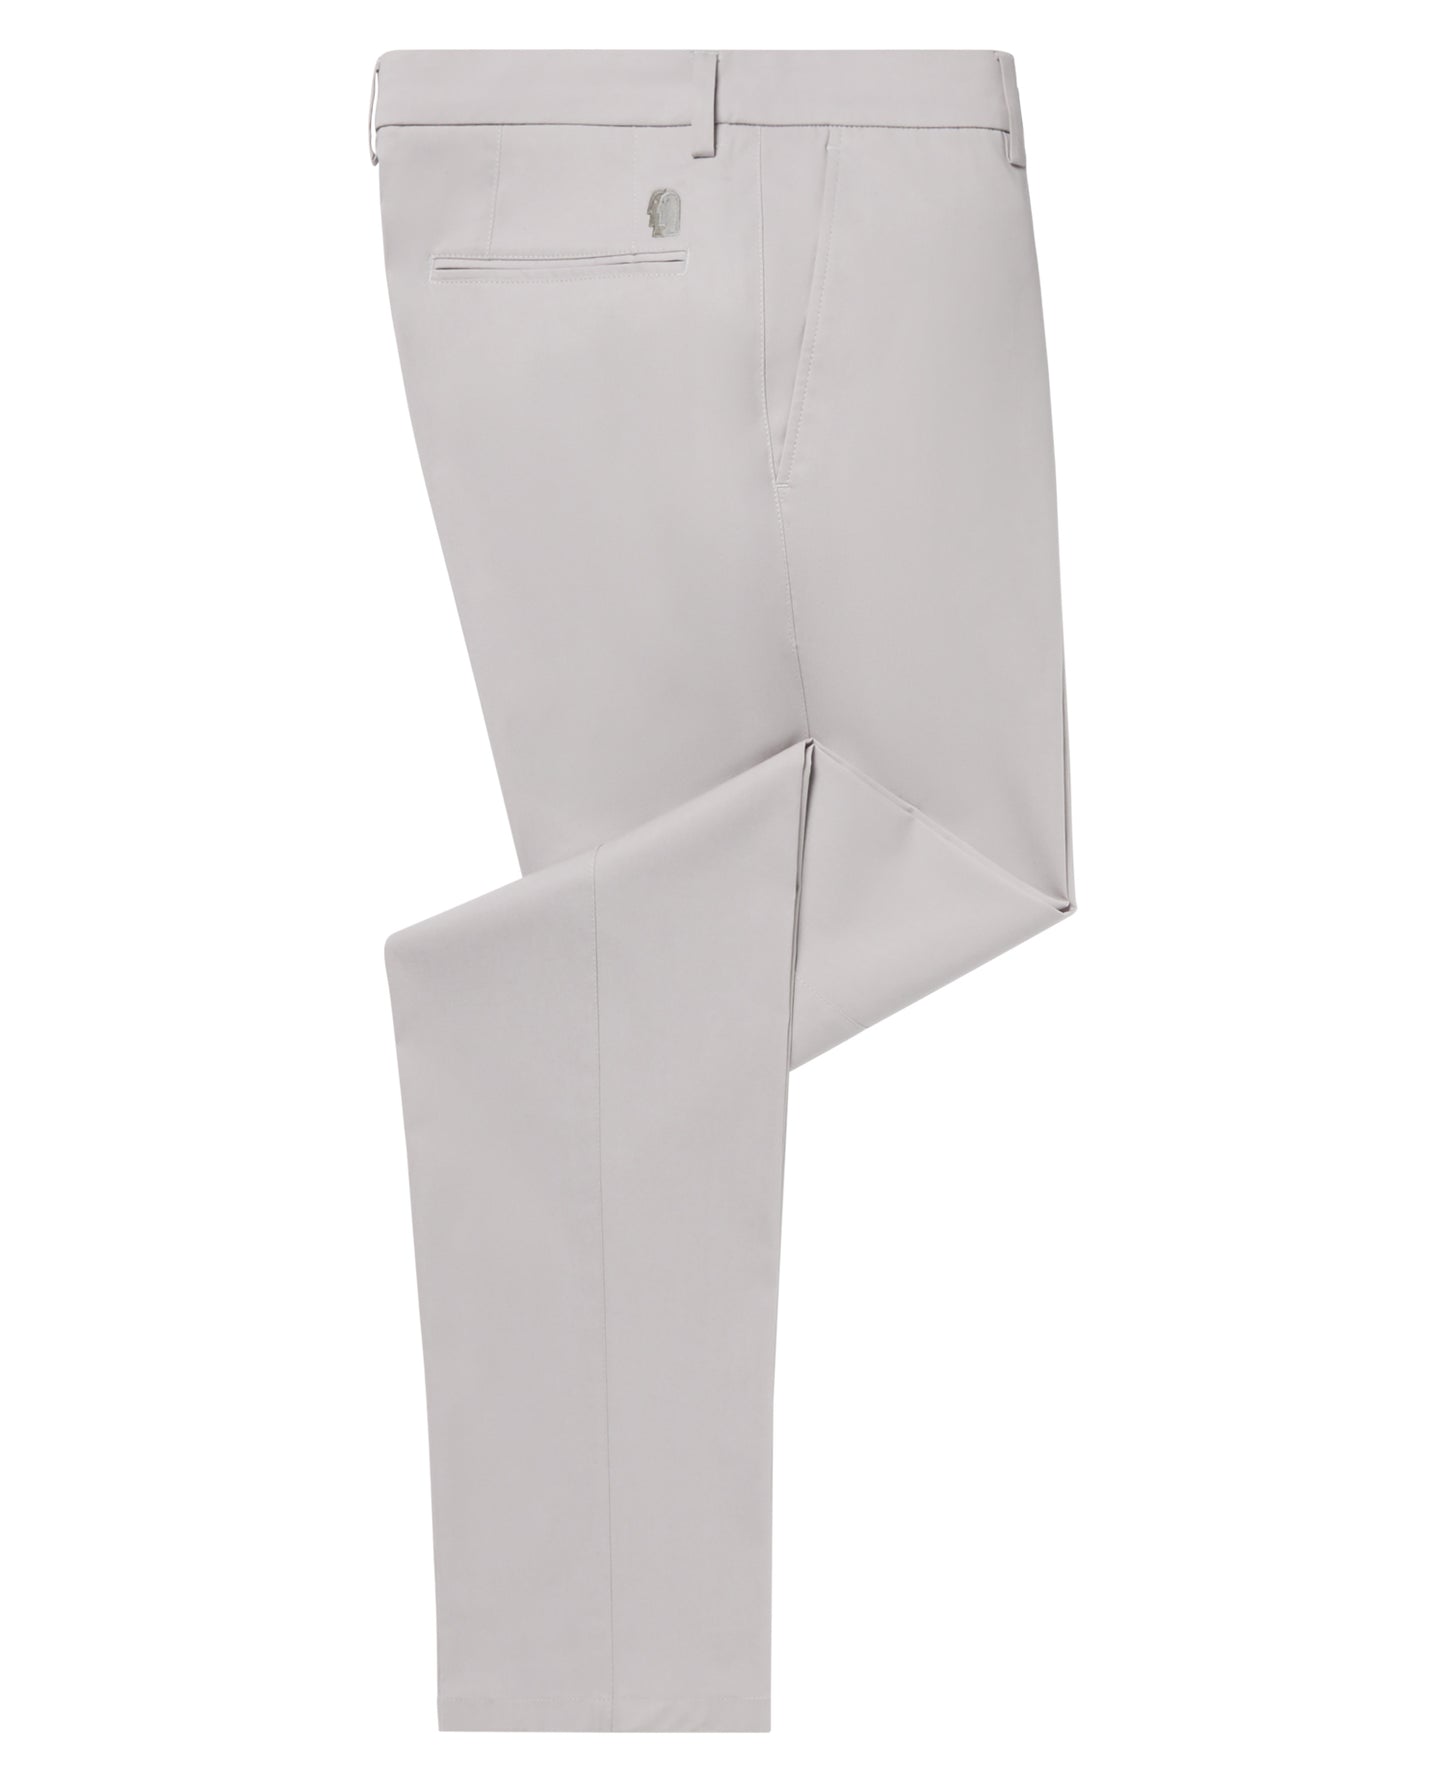 Remus Uomo Edison Casual Trouser - Light Grey